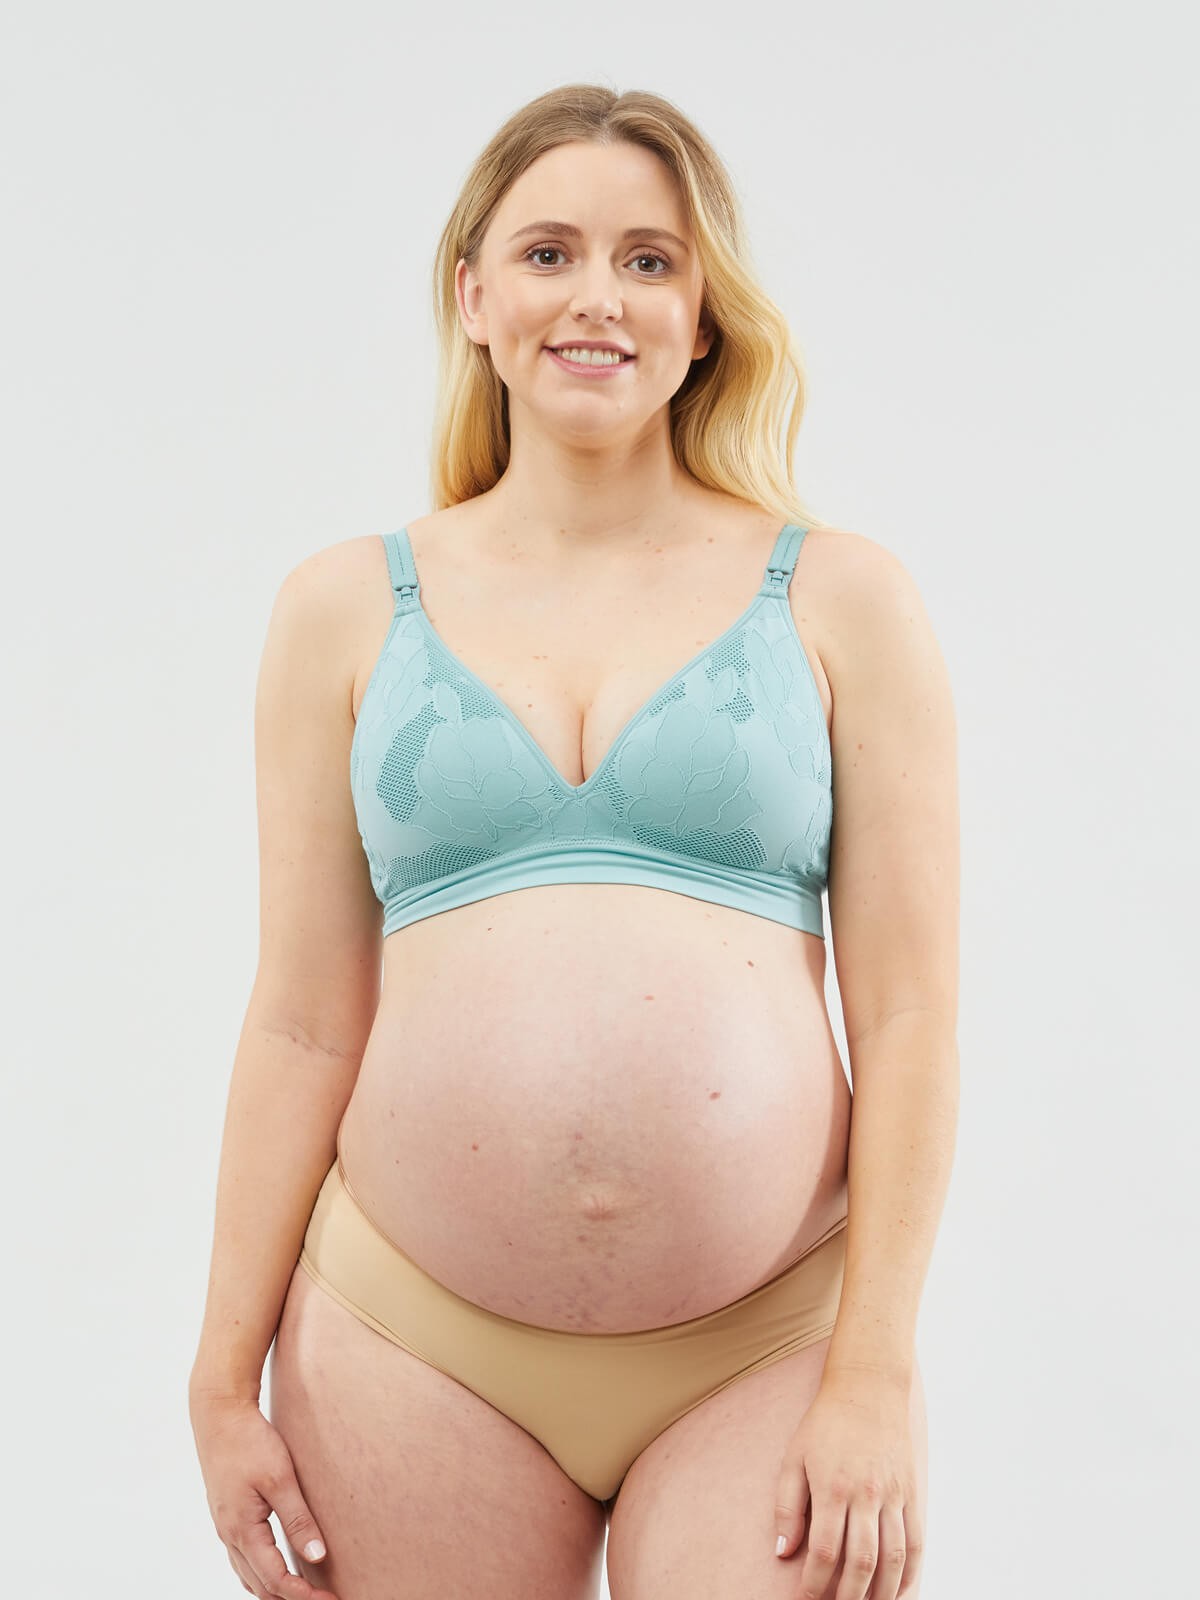 Nursing Bra With Front Open Easy Access, Comfortable Maternity Breastfeeding  Underwear